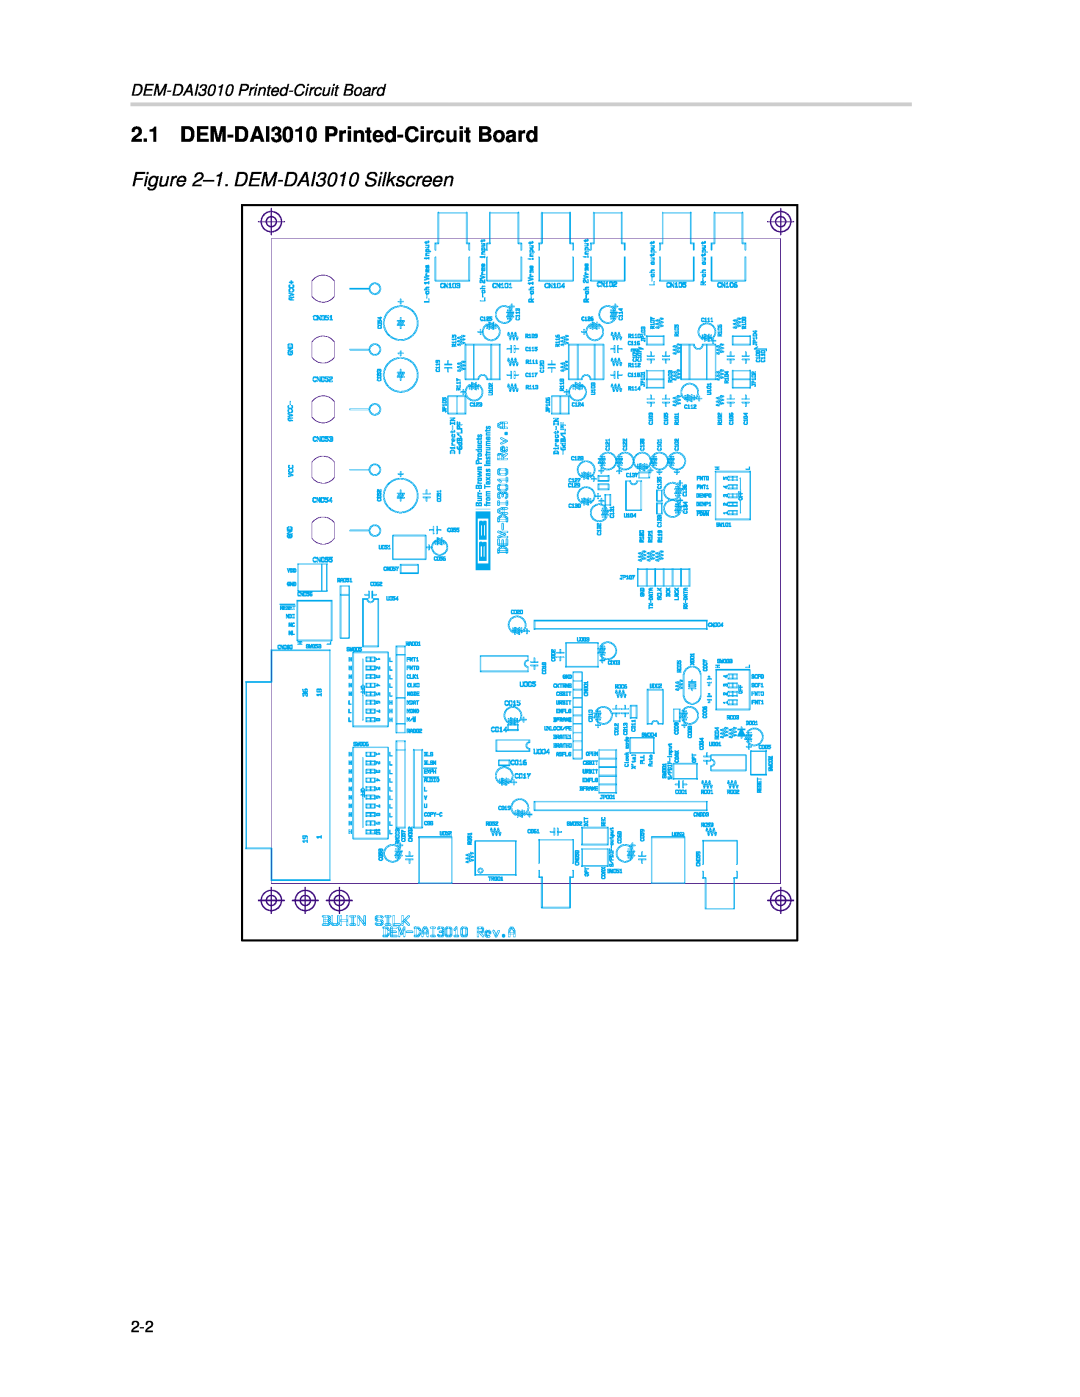 Texas Instruments manual DEM-DAI3010 Printed-CircuitBoard, 1. DEM-DAI3010Silkscreen 